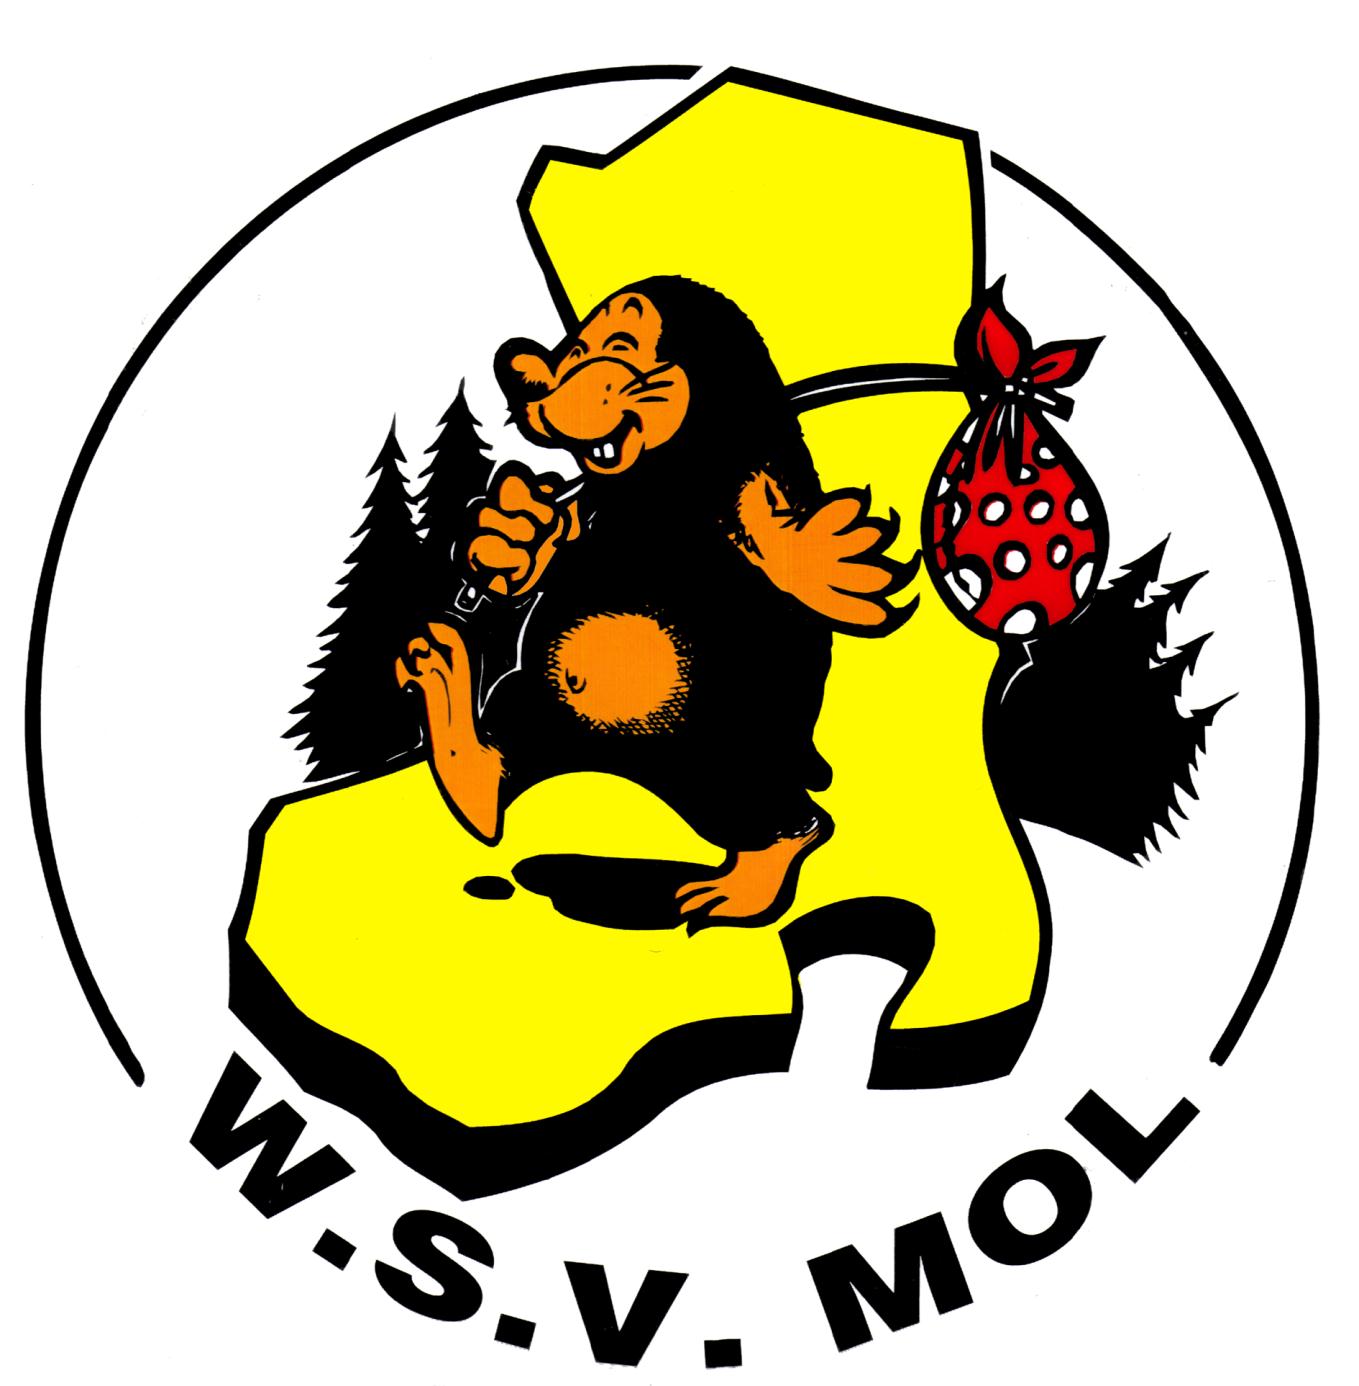 W.S.V. Mol